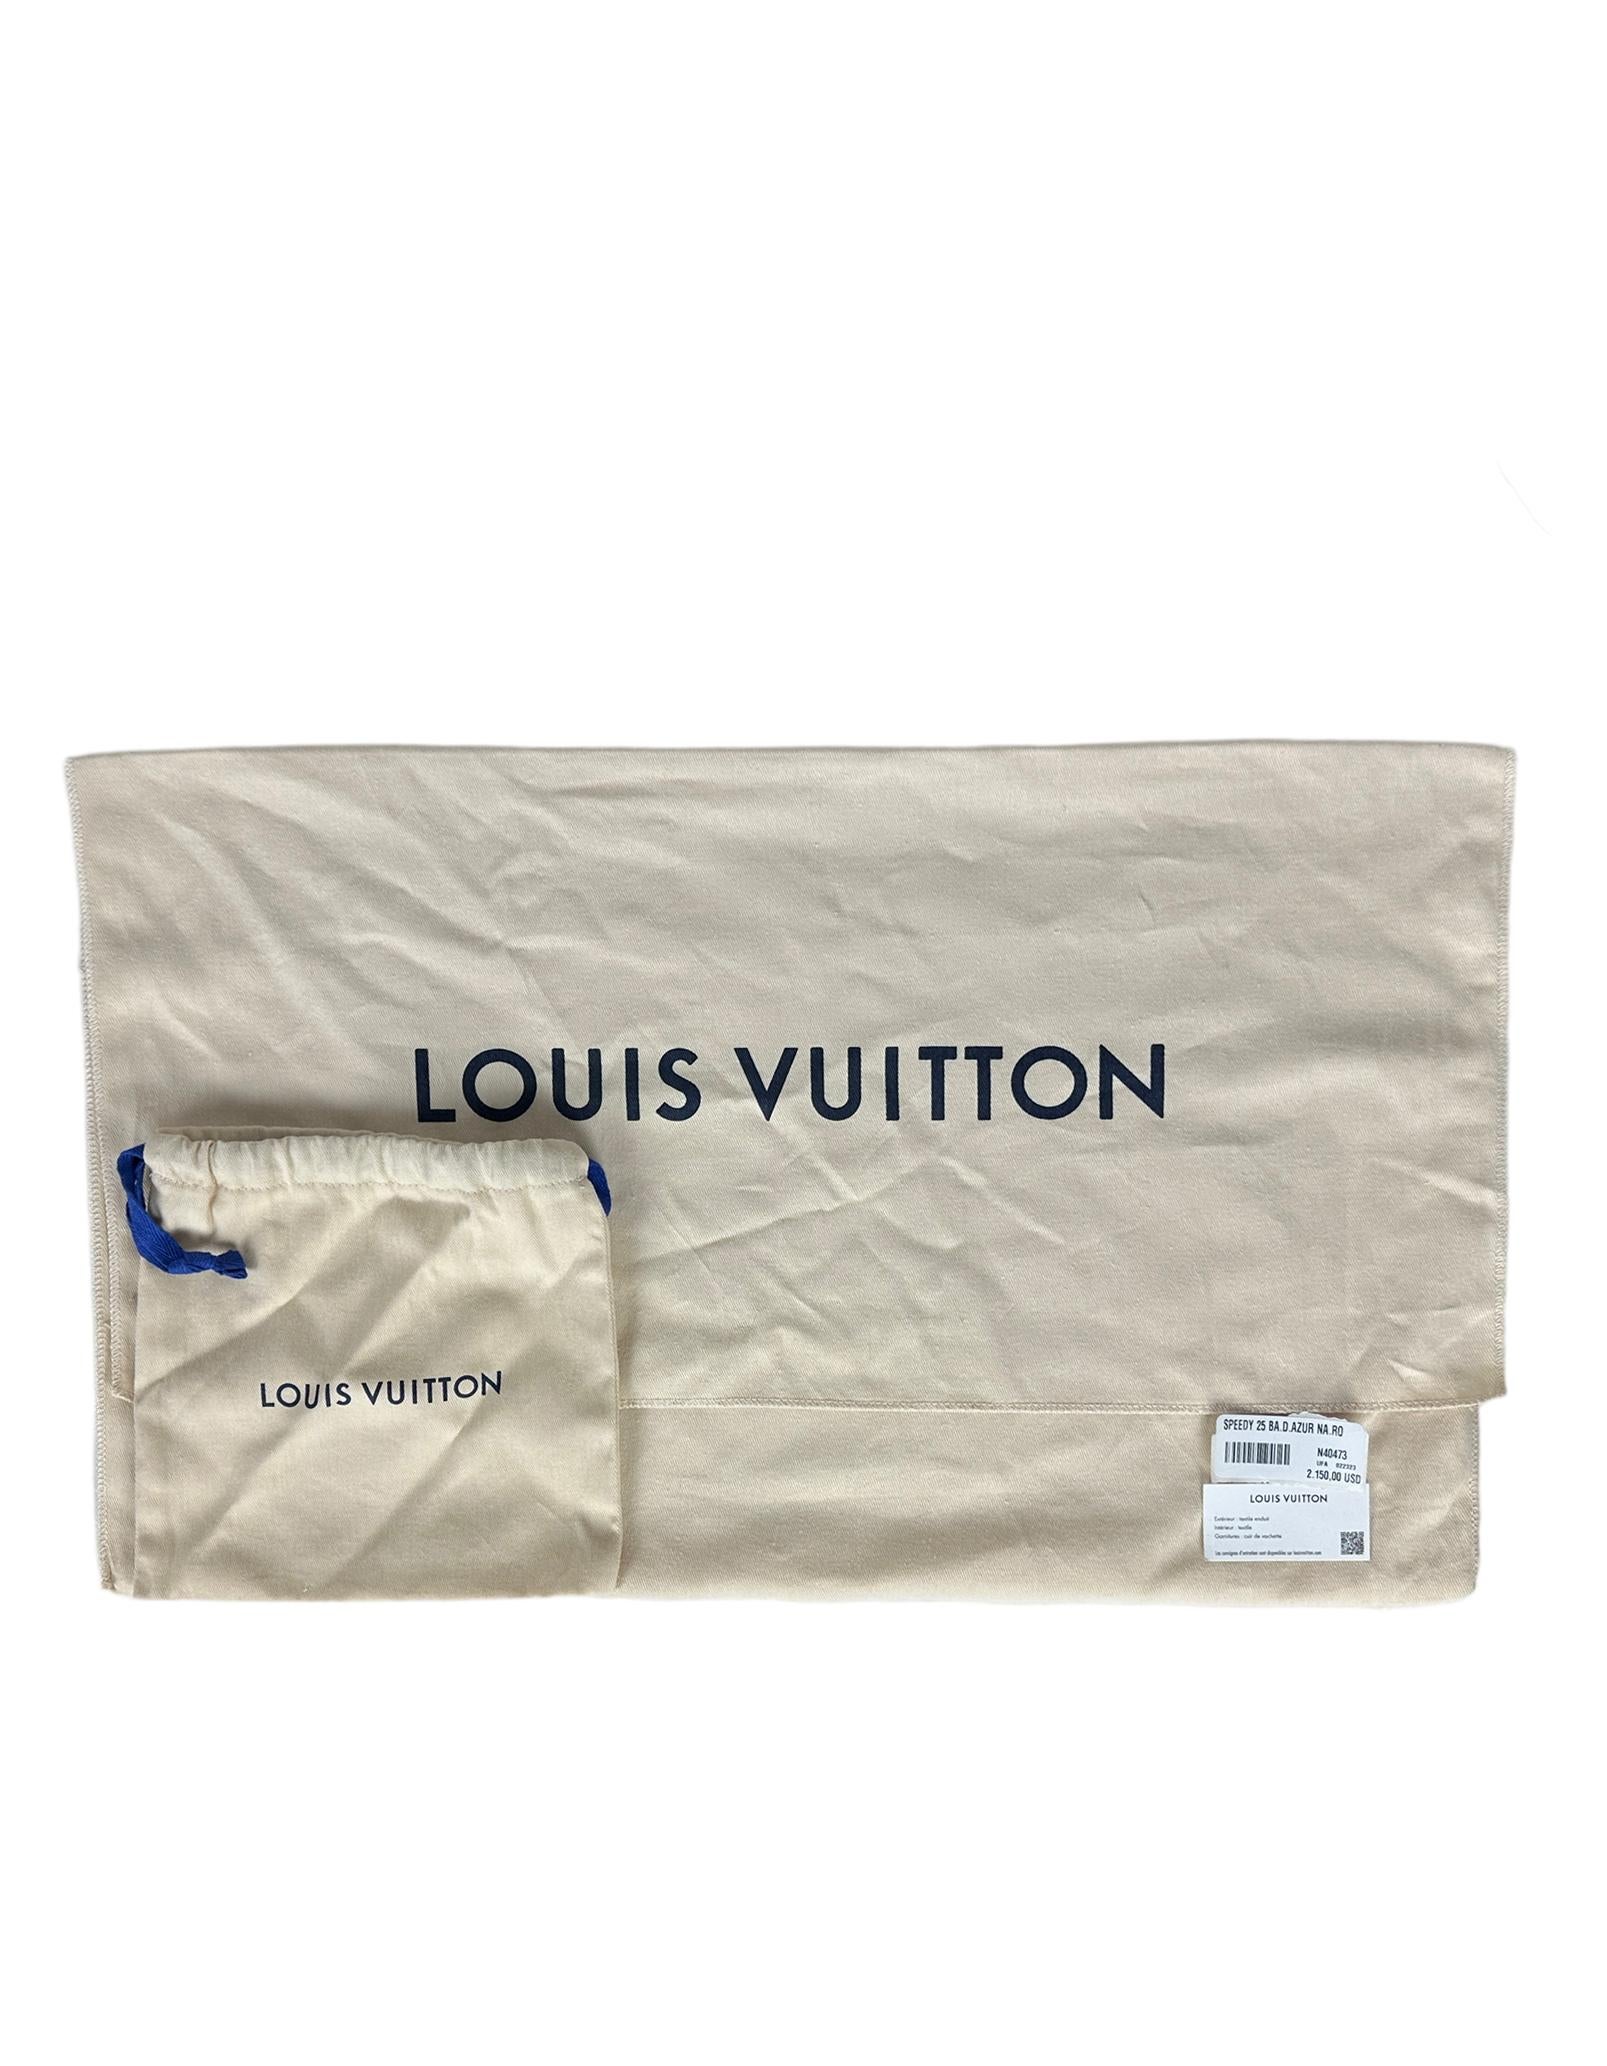 Louis Vuitton Limited Edition Nautical Damier Azur Speedy Bandouliere 25 Bag For Sale 5